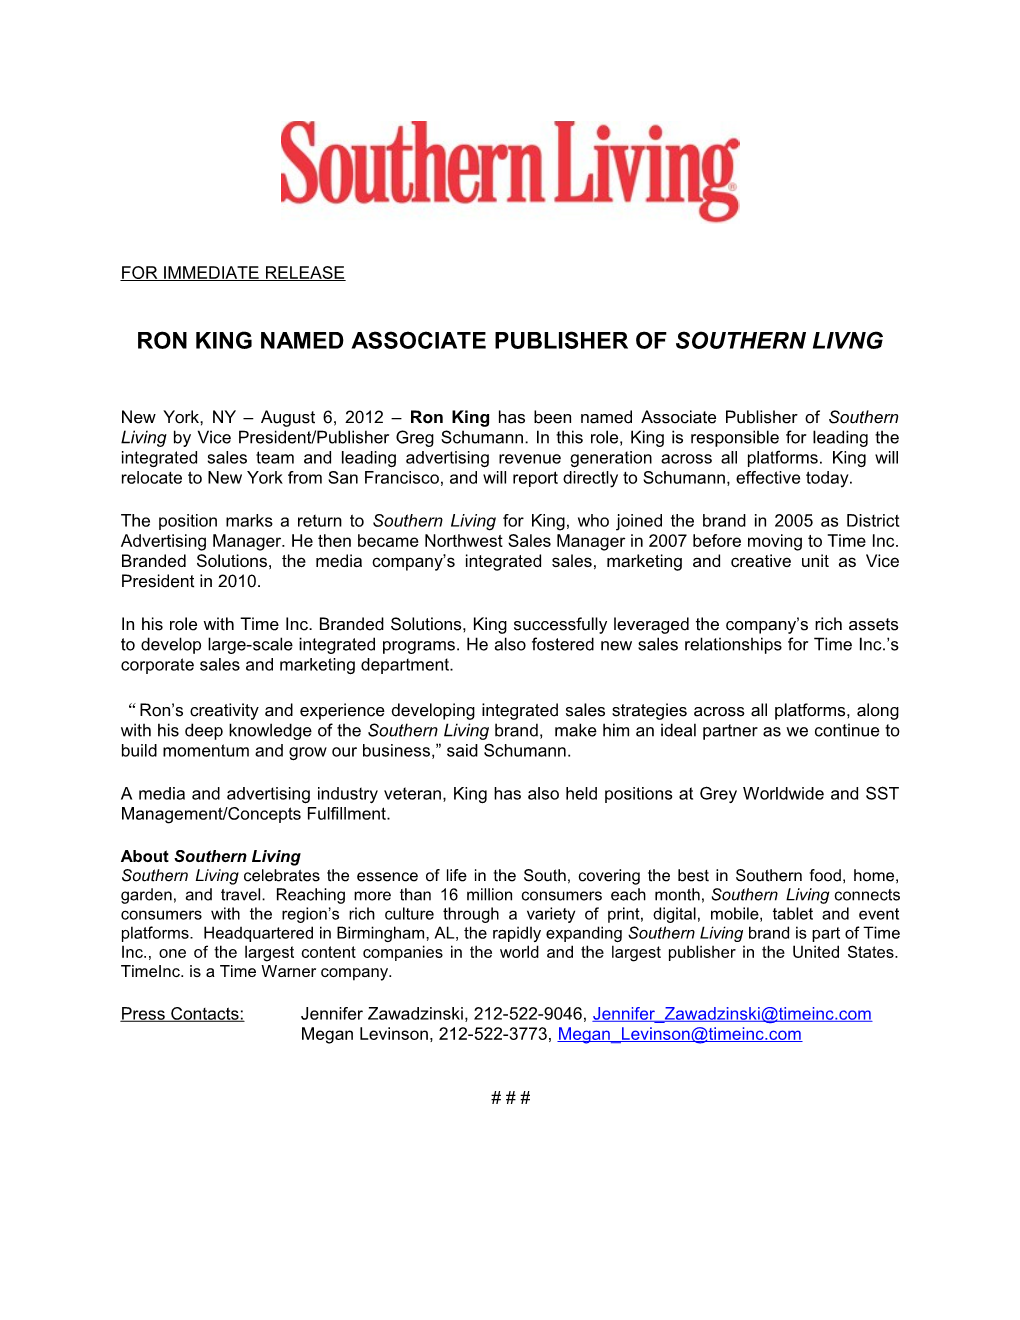 Ron King Named Associate Publisher of Southern Livng